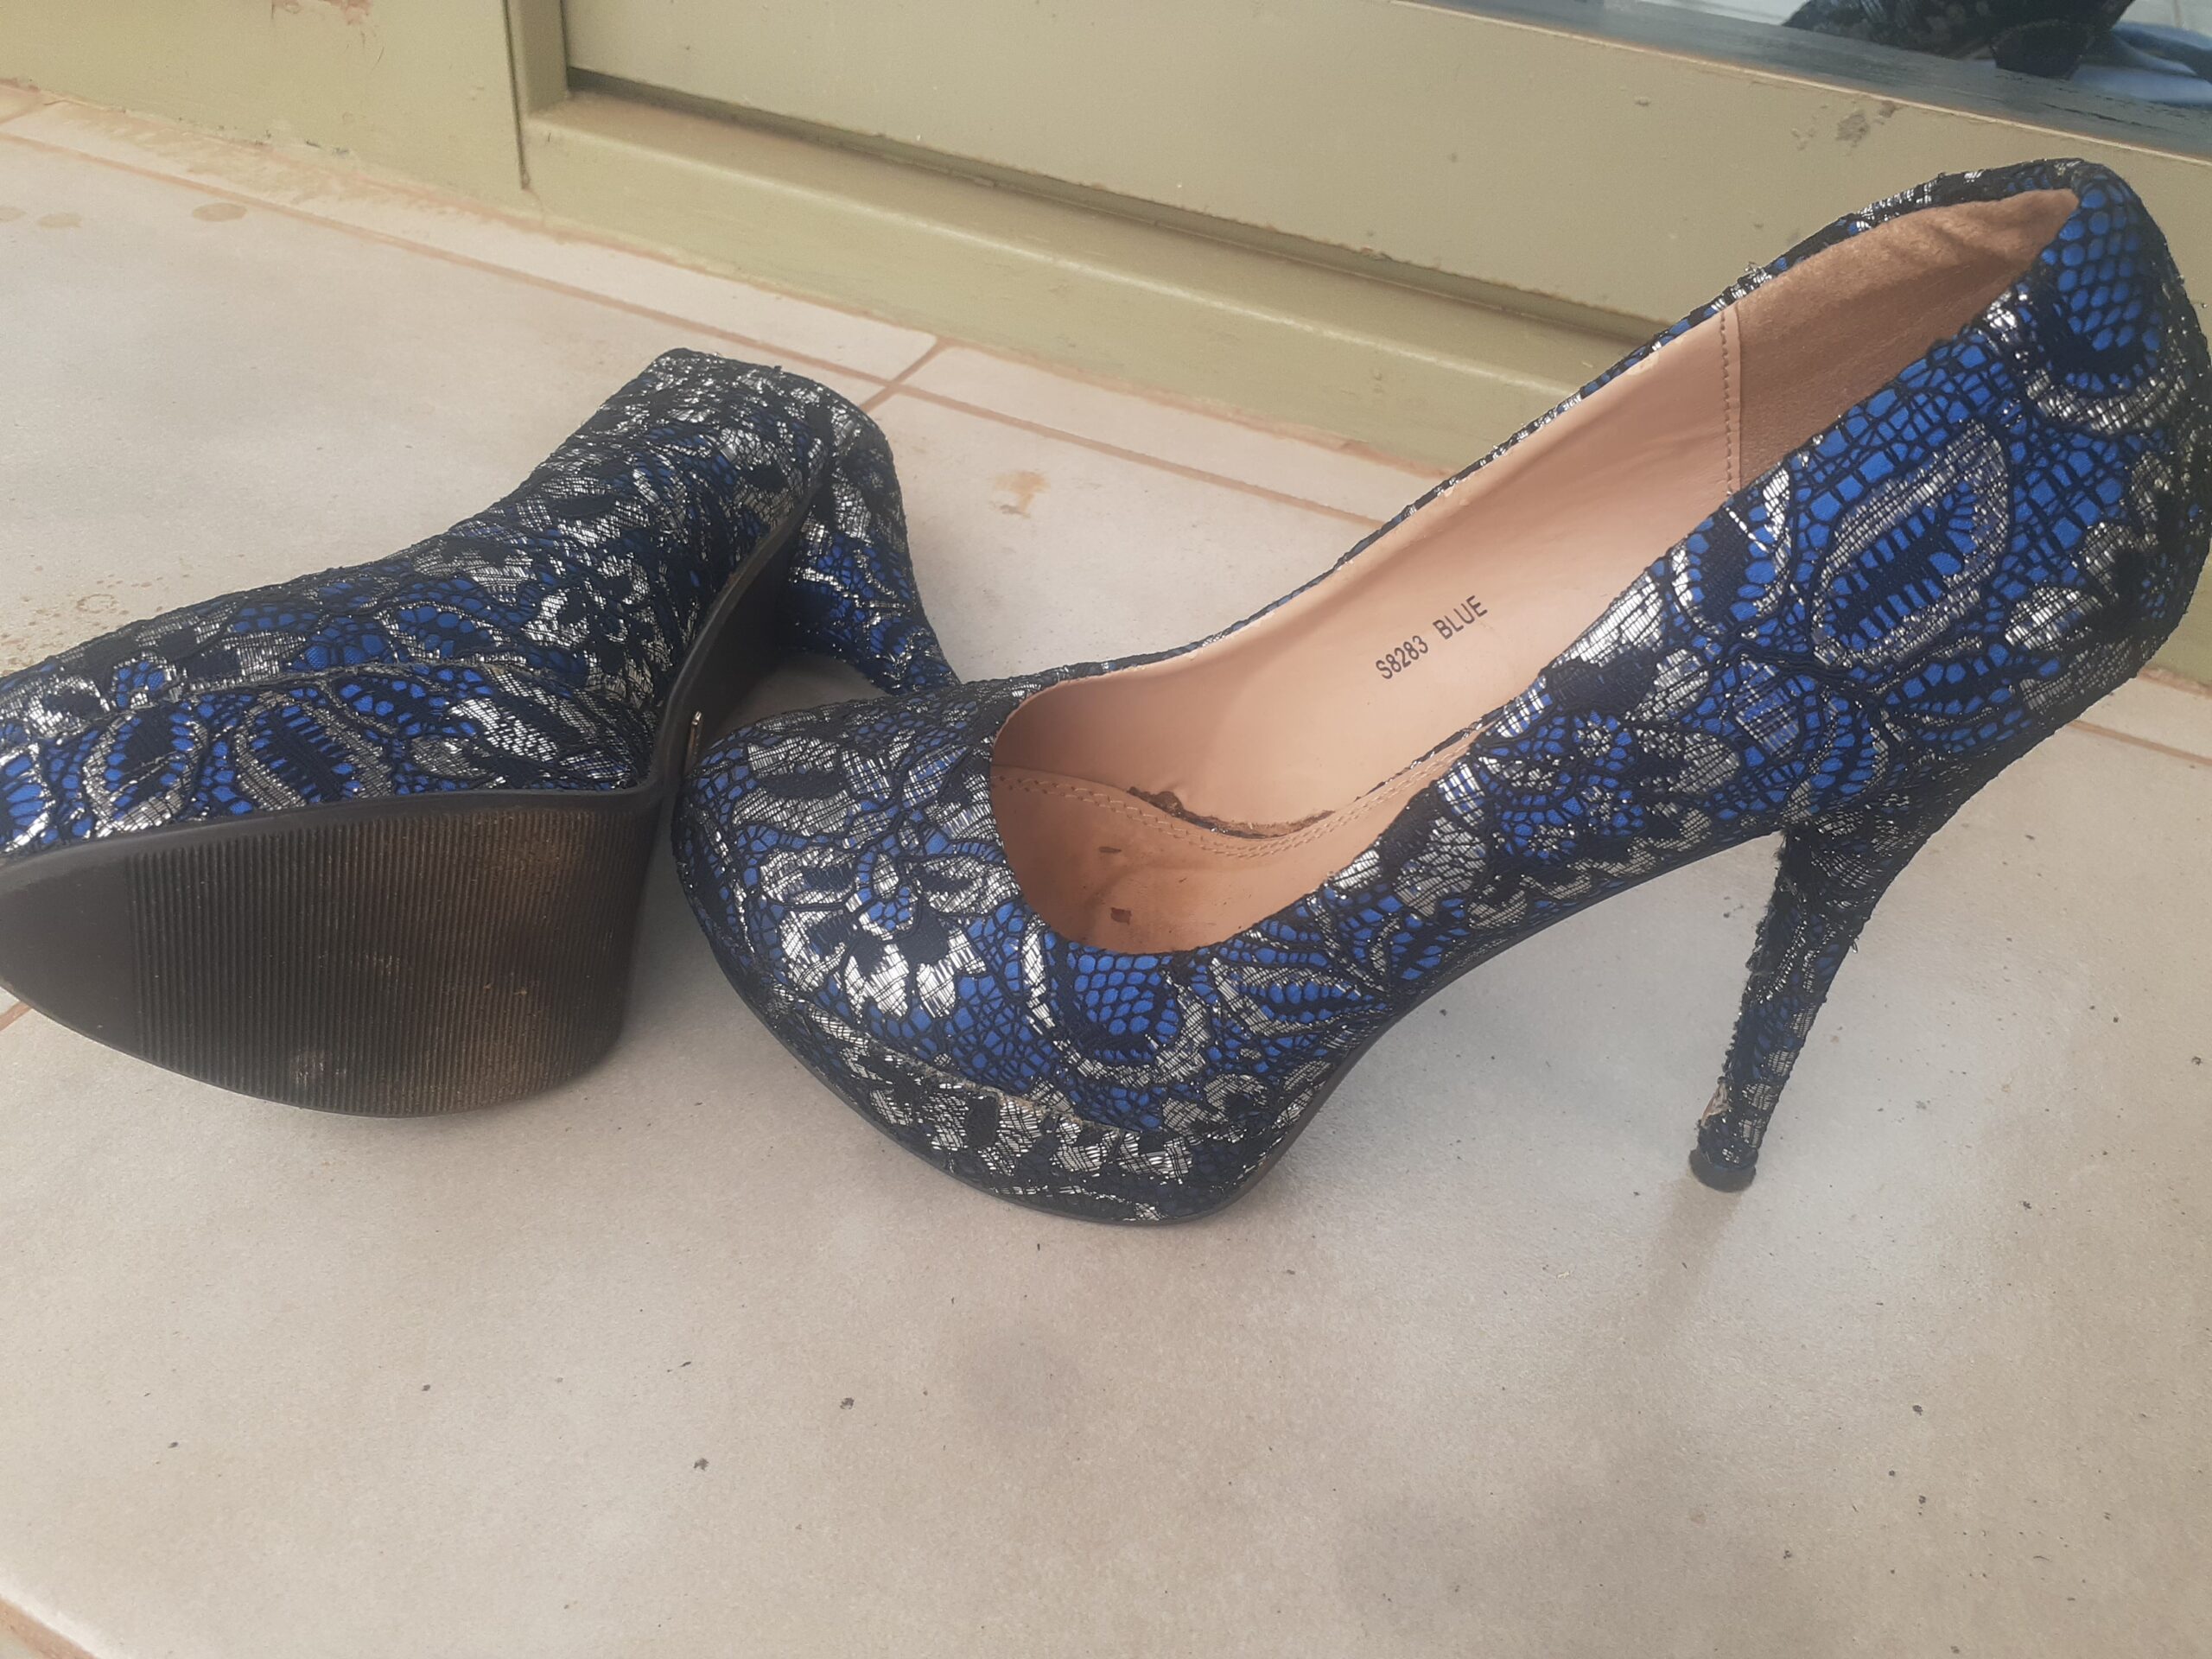 Lace shoes. Blue, black, silver in colour - Chatu Kadali